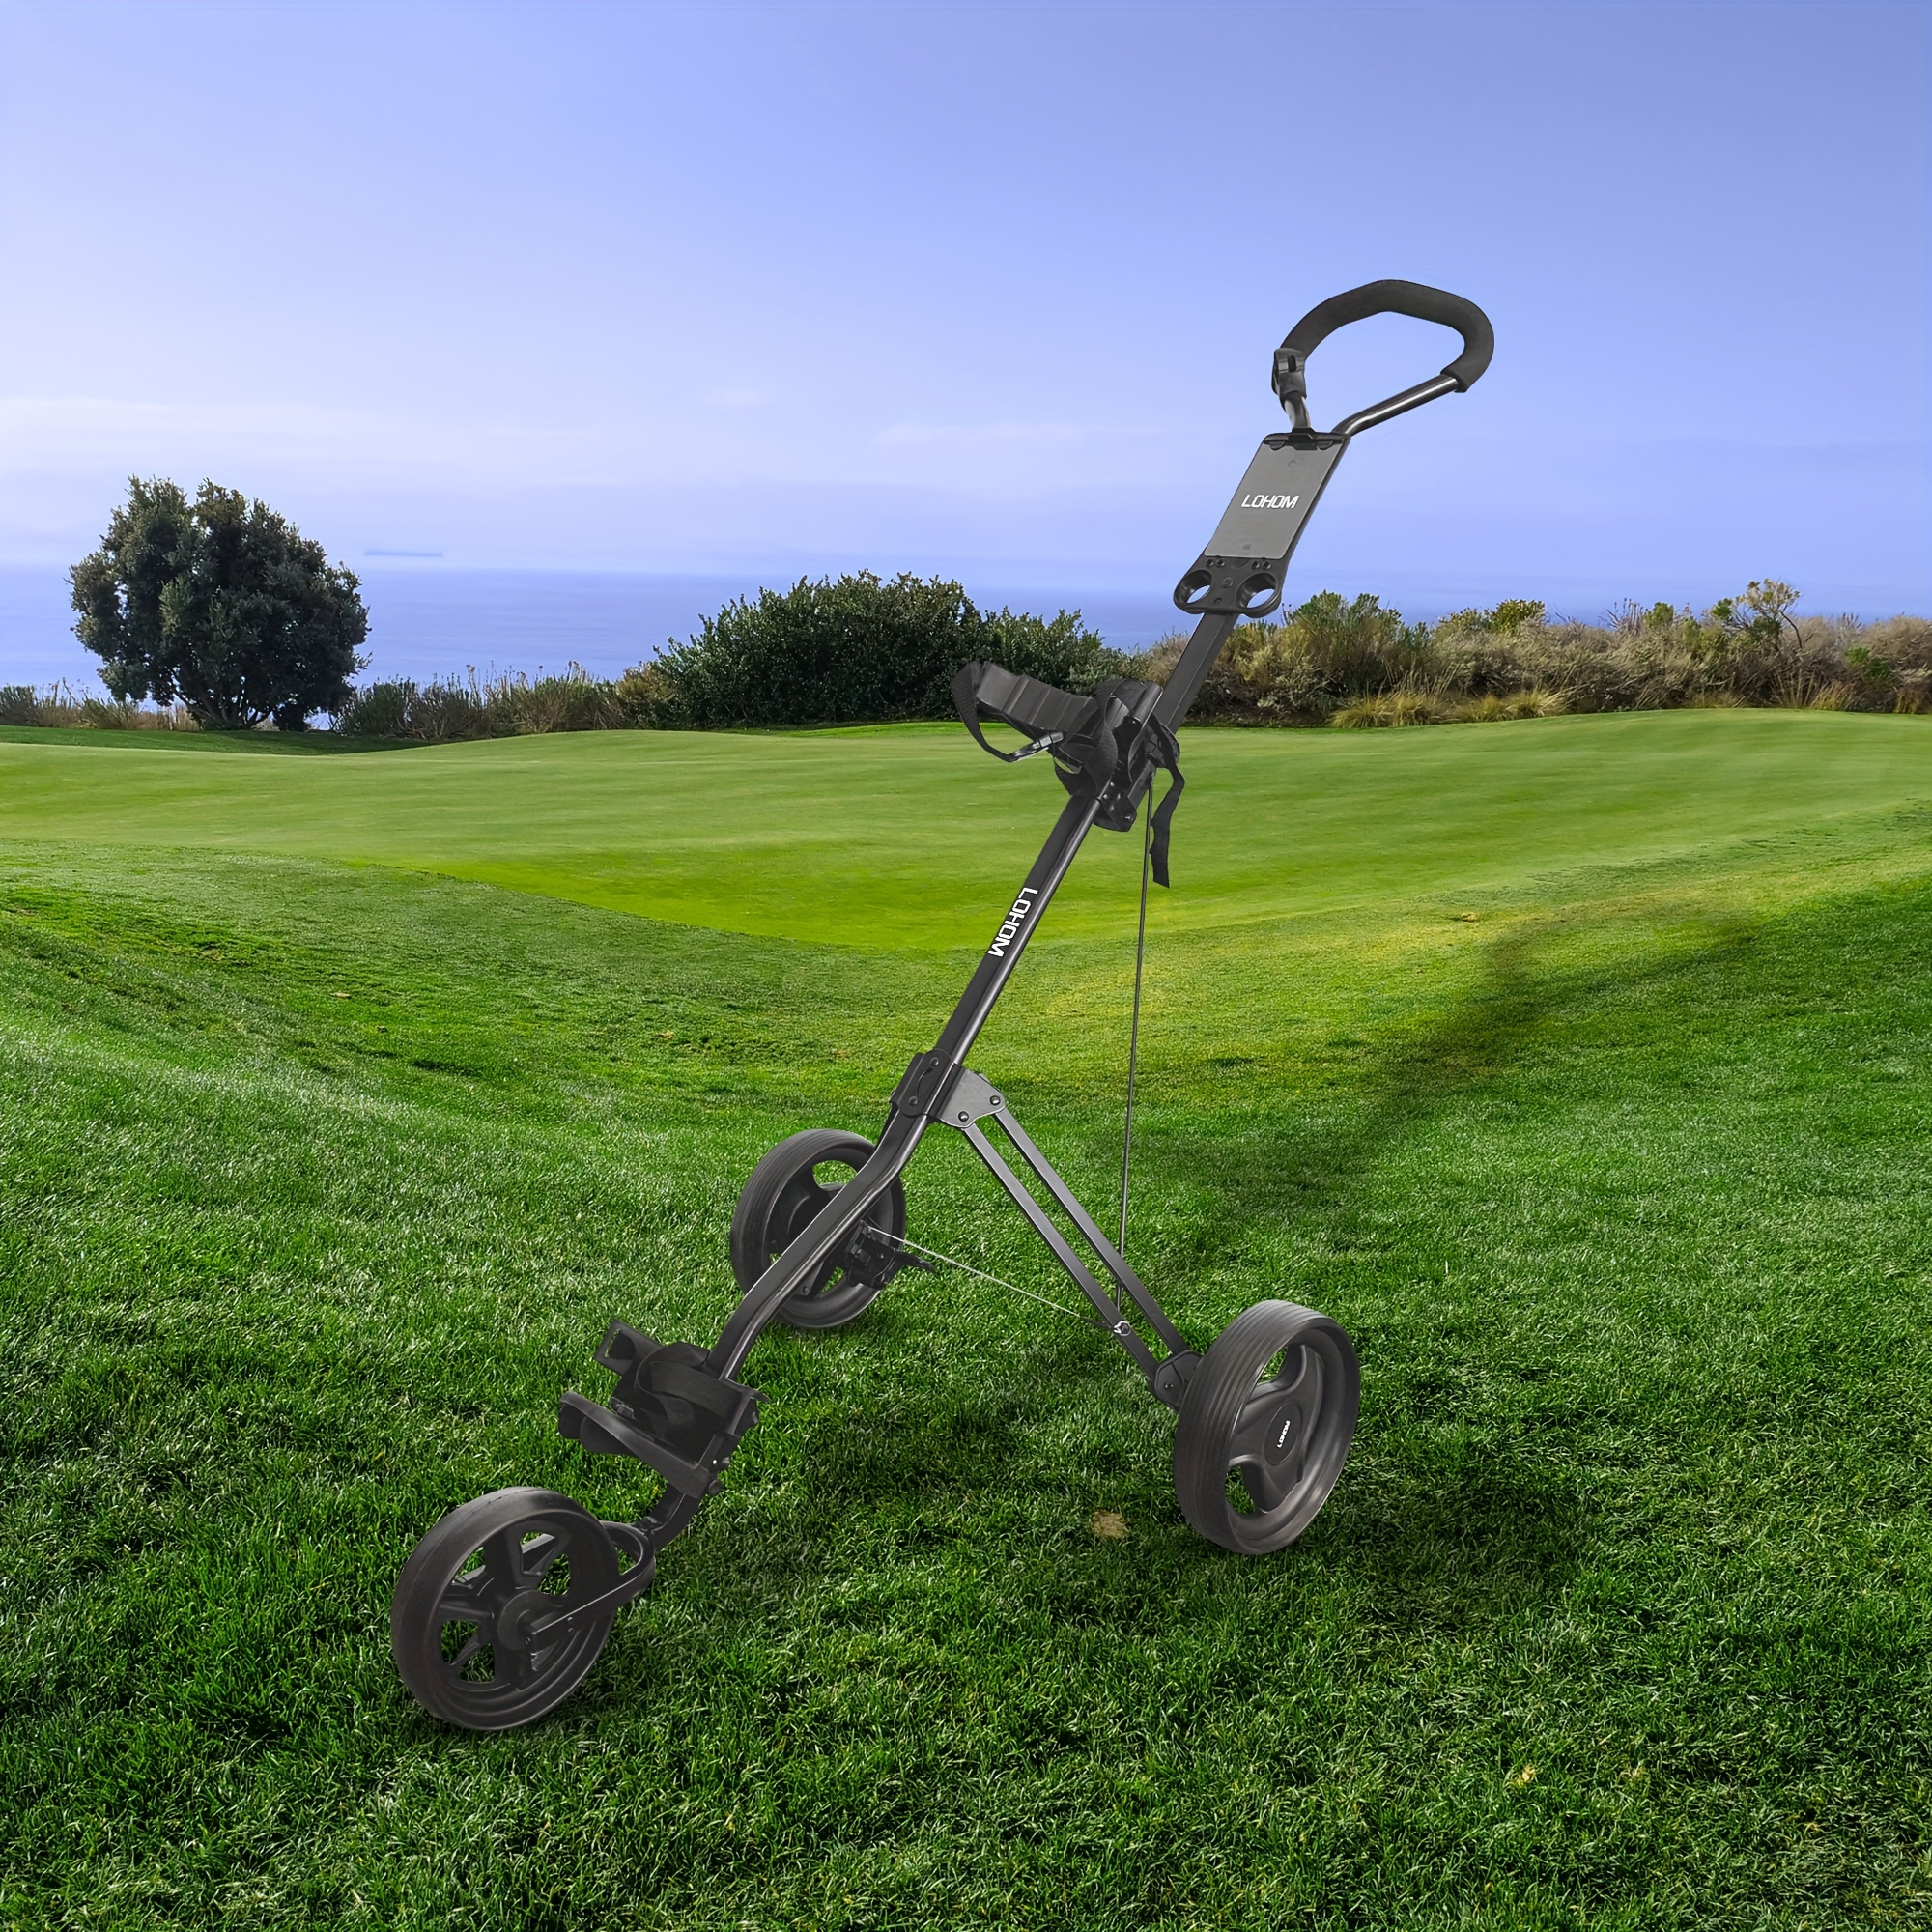 golf push cart golf pull cart for golf clubs and golf bag golf push carts 3 wheel easy to folding golf trolley with scorecard holder